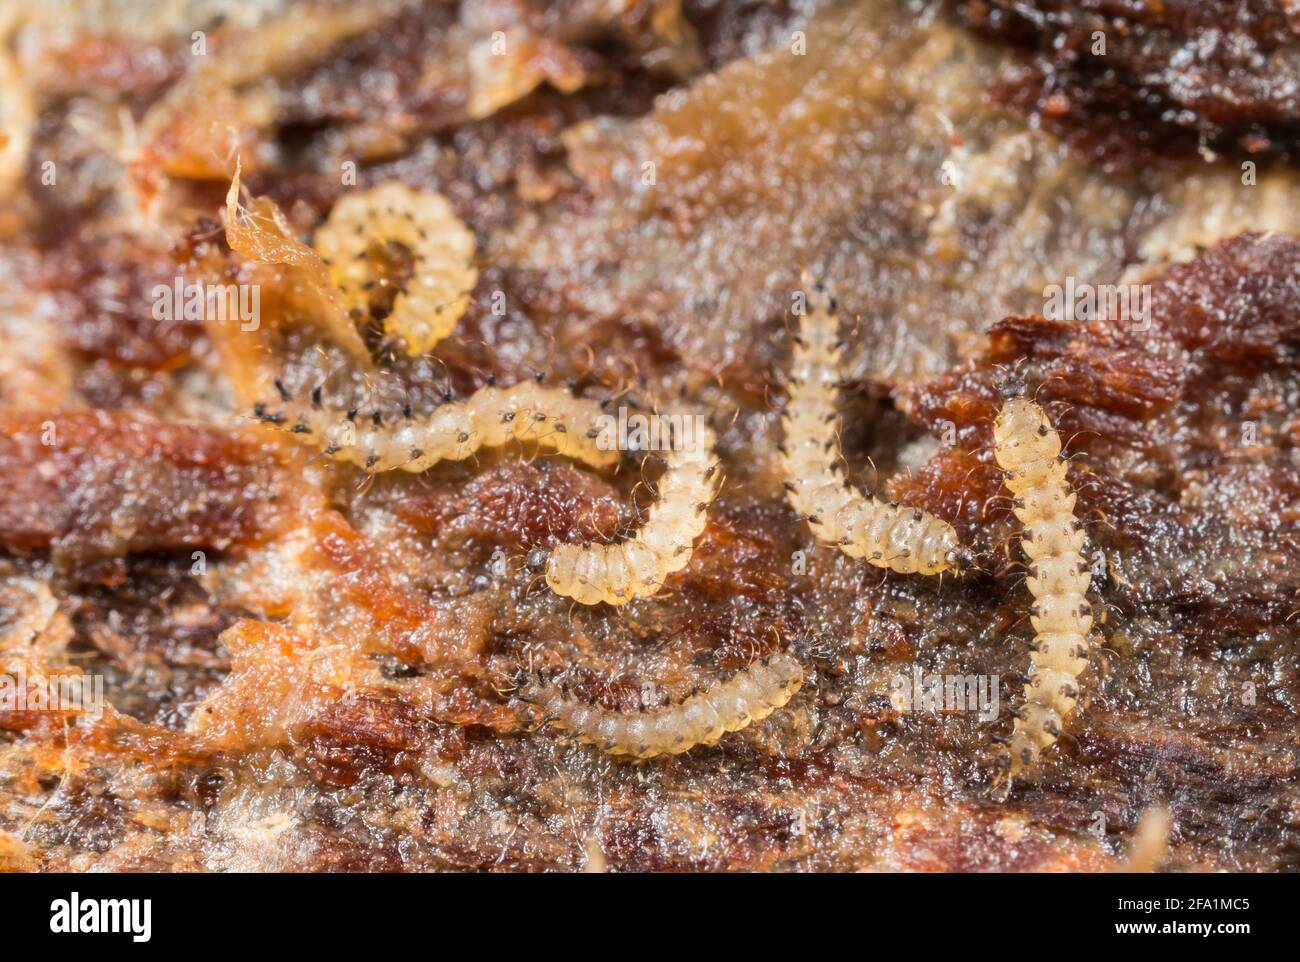 Biting midge larva (Forcipomyia sp) under a rotten log Stock Photo